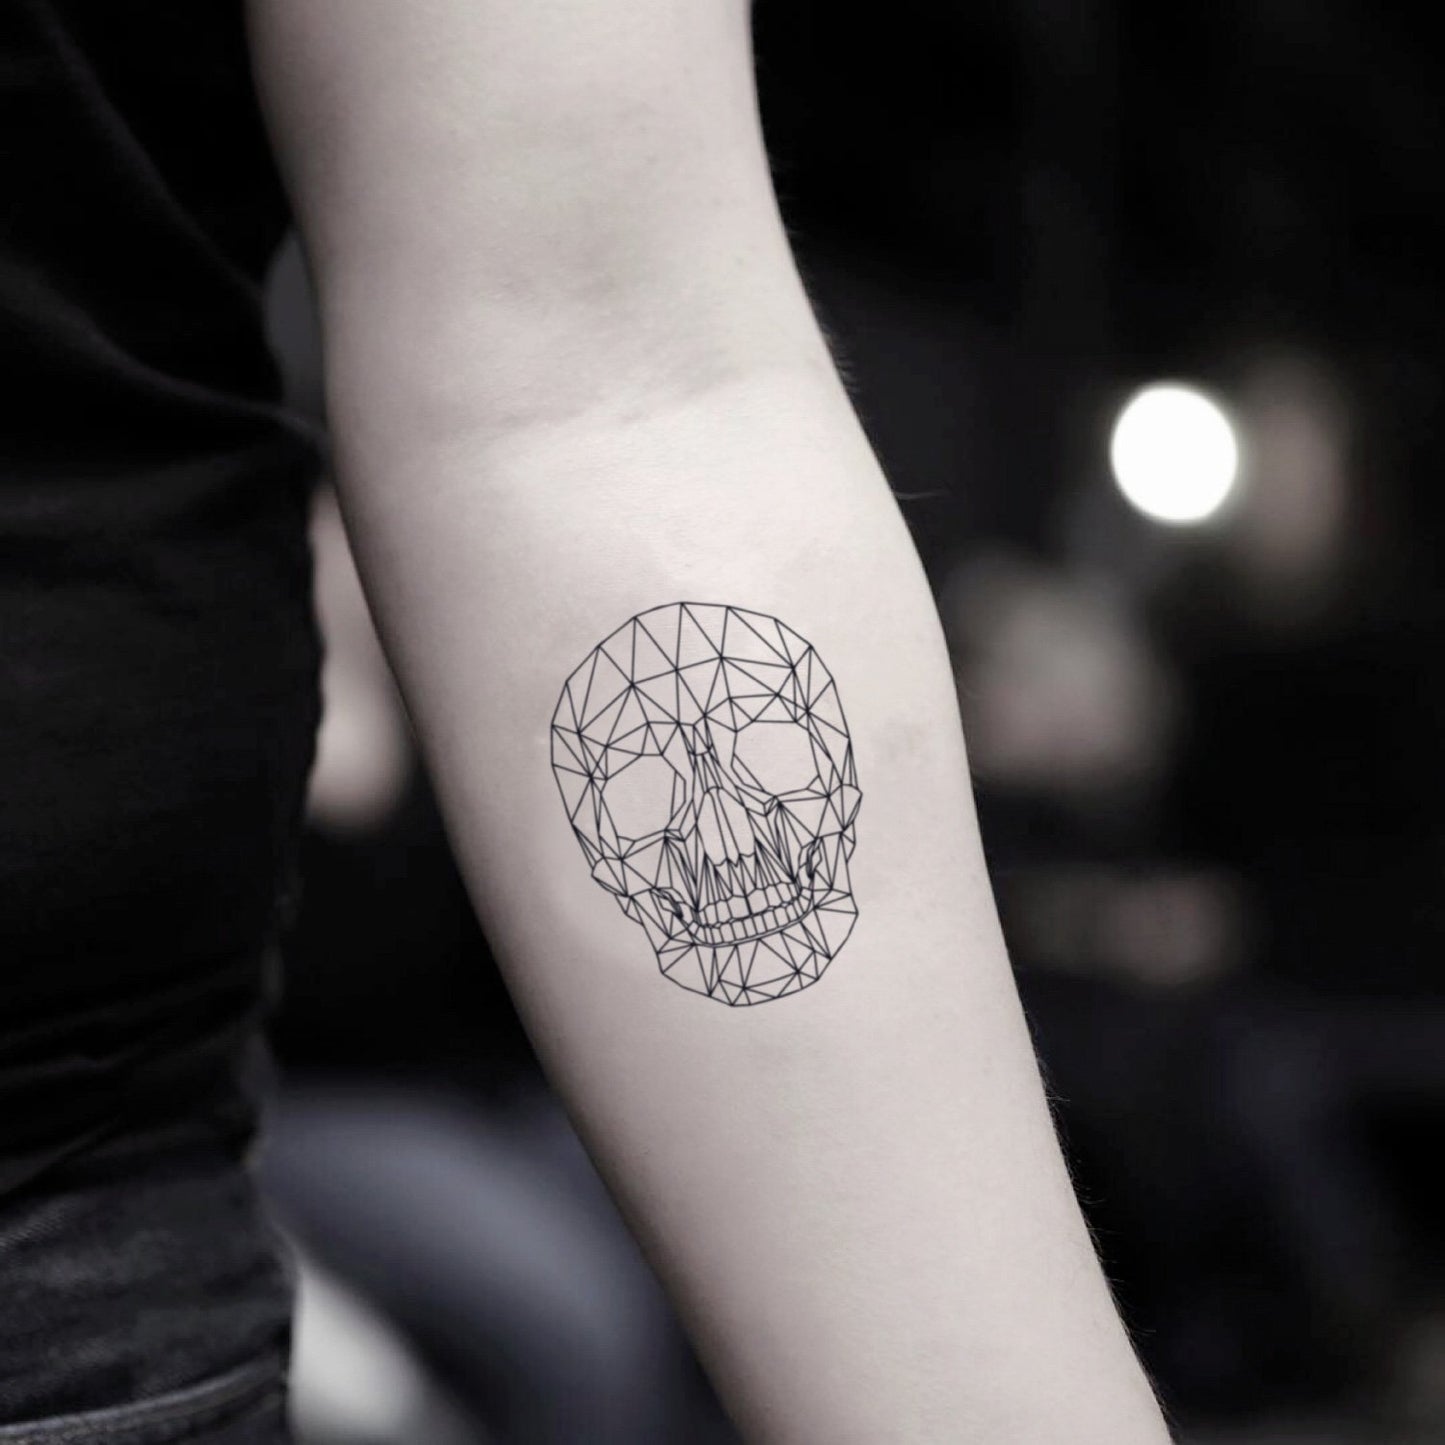 fake small geometric skull temporary tattoo sticker design idea on inner arm